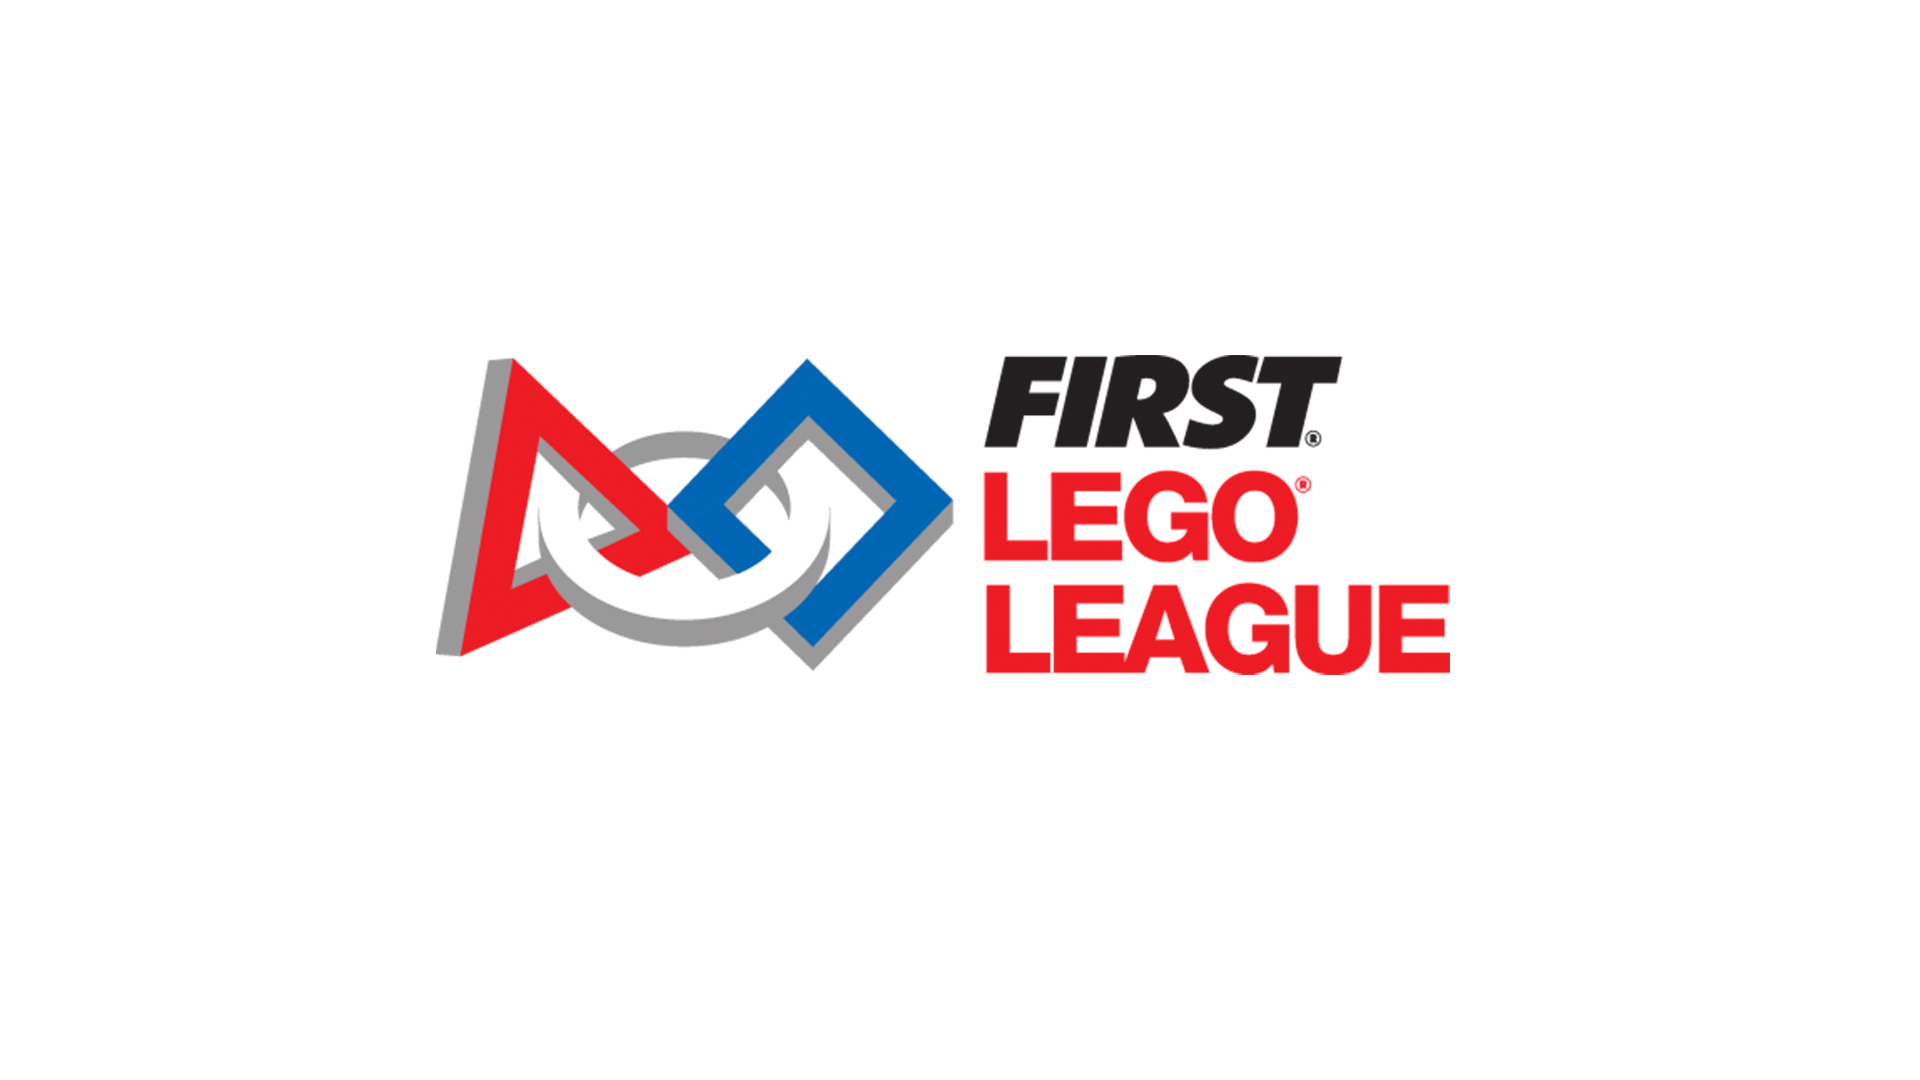 first lego league